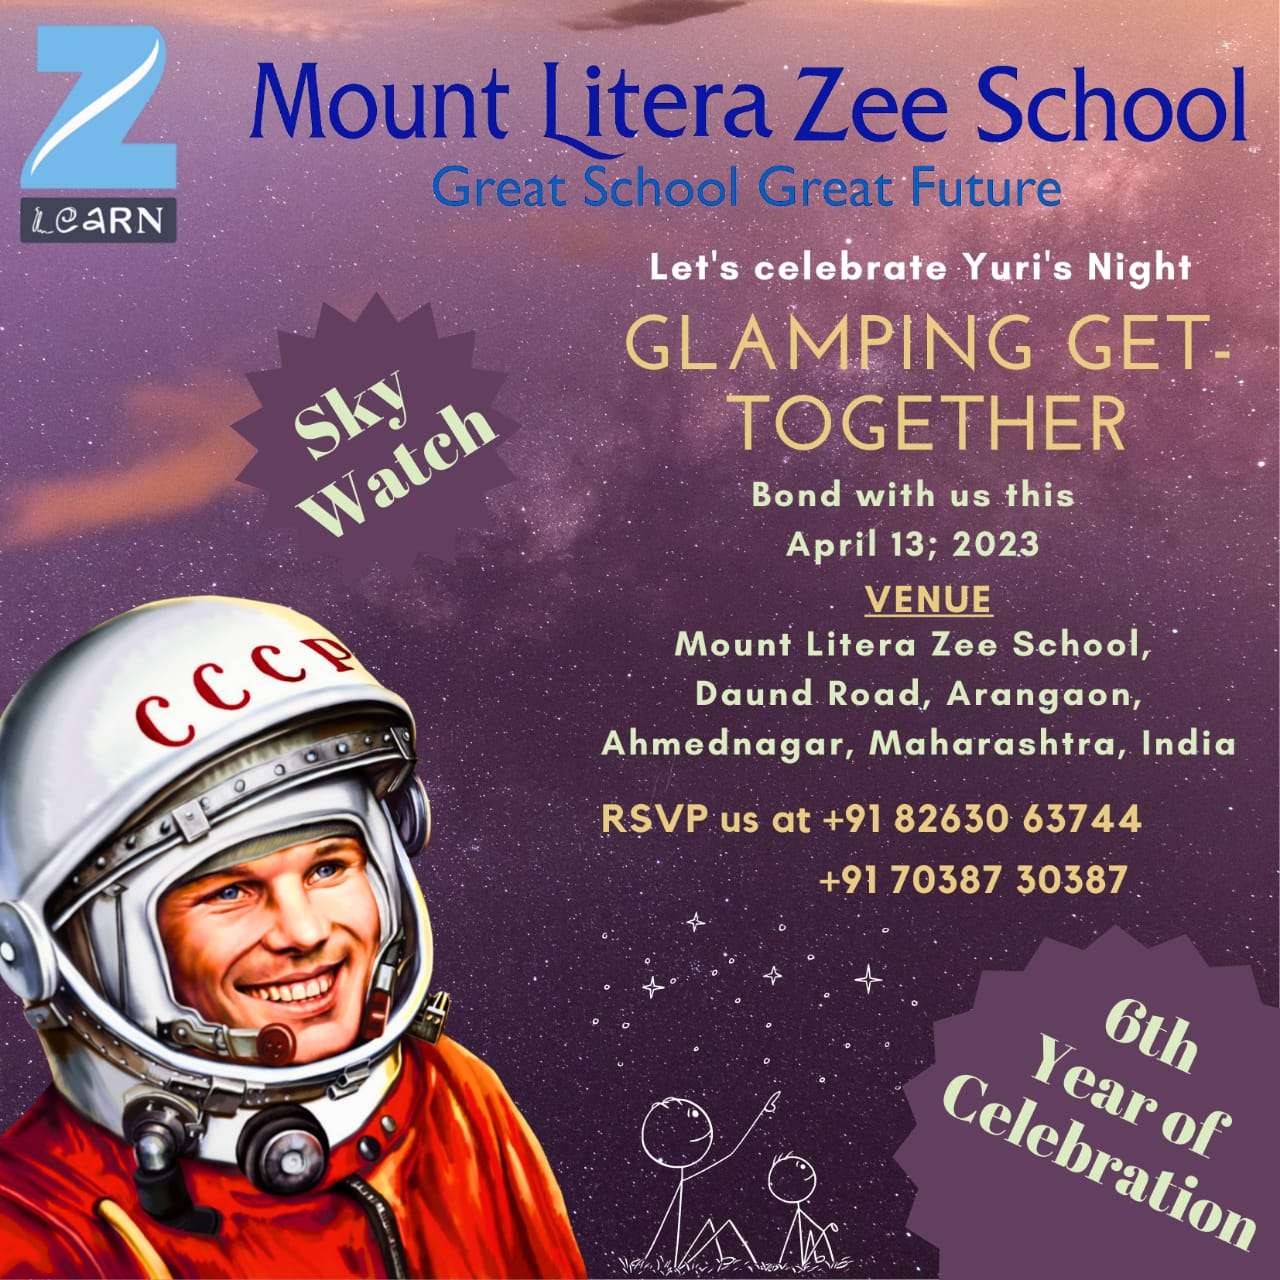 Mount Litera Zee School, Daund road, Ahmednagar